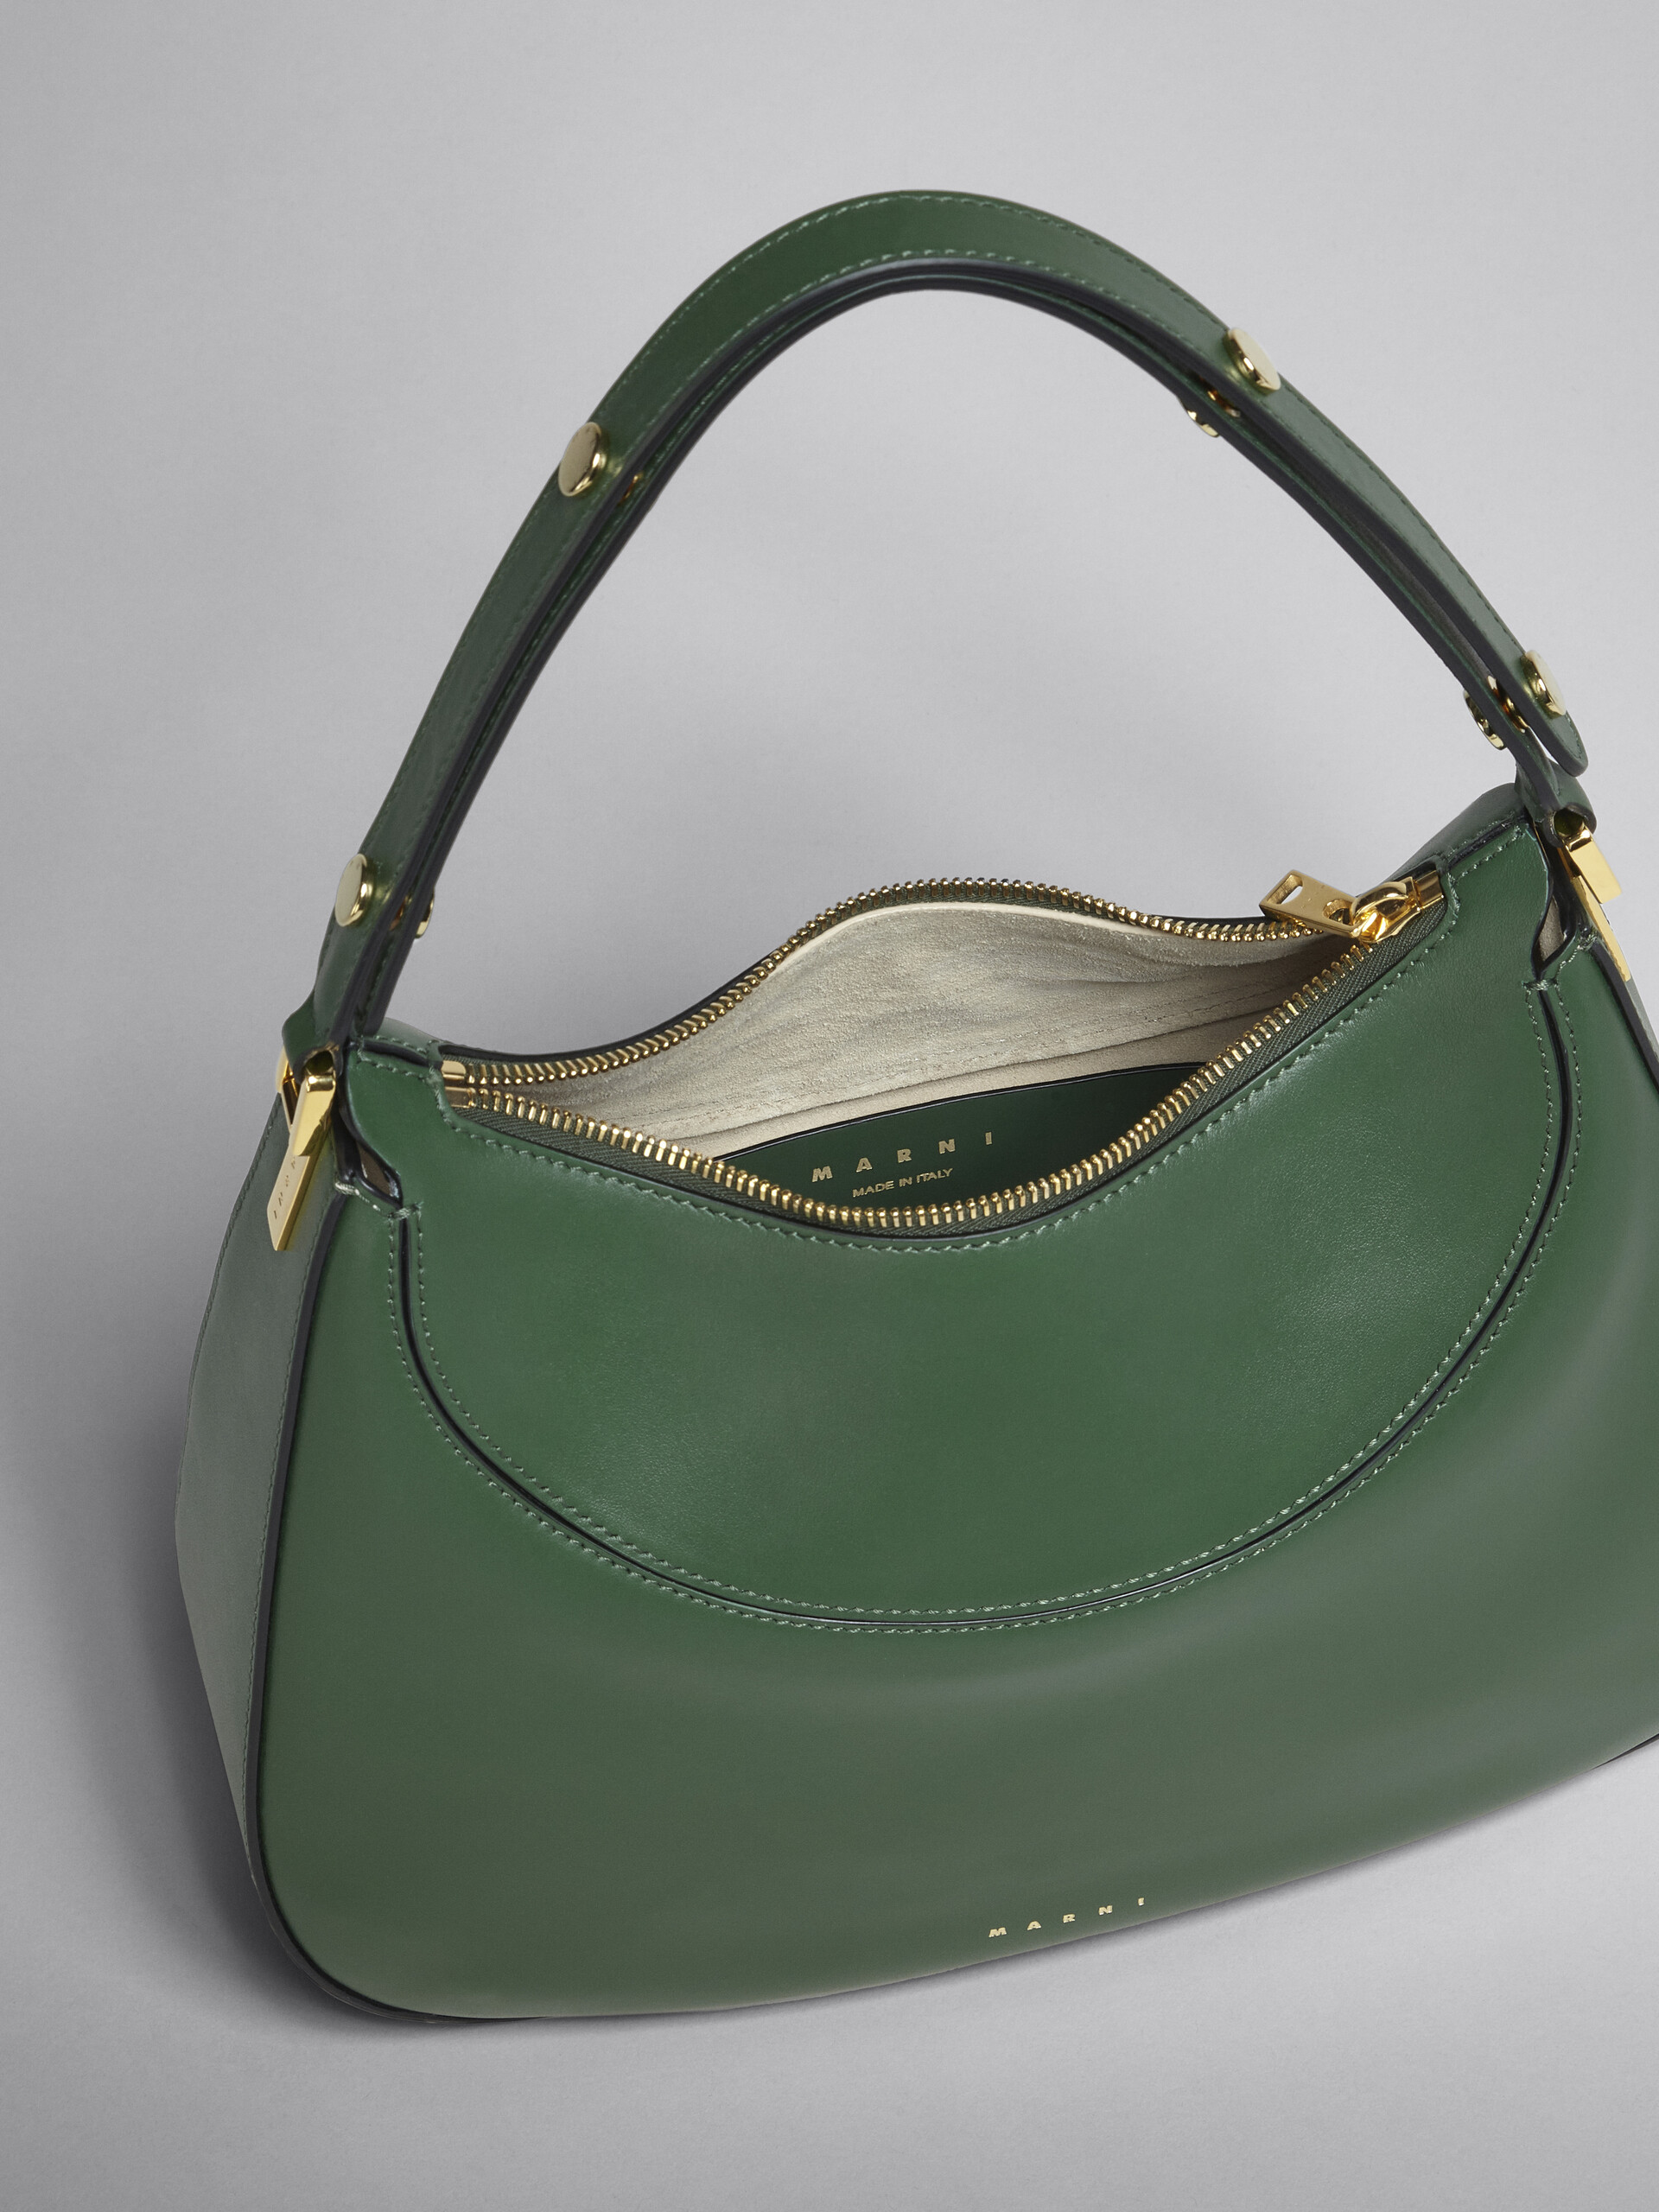 Milano bag grande in pelle verde - Borse a mano - Image 4